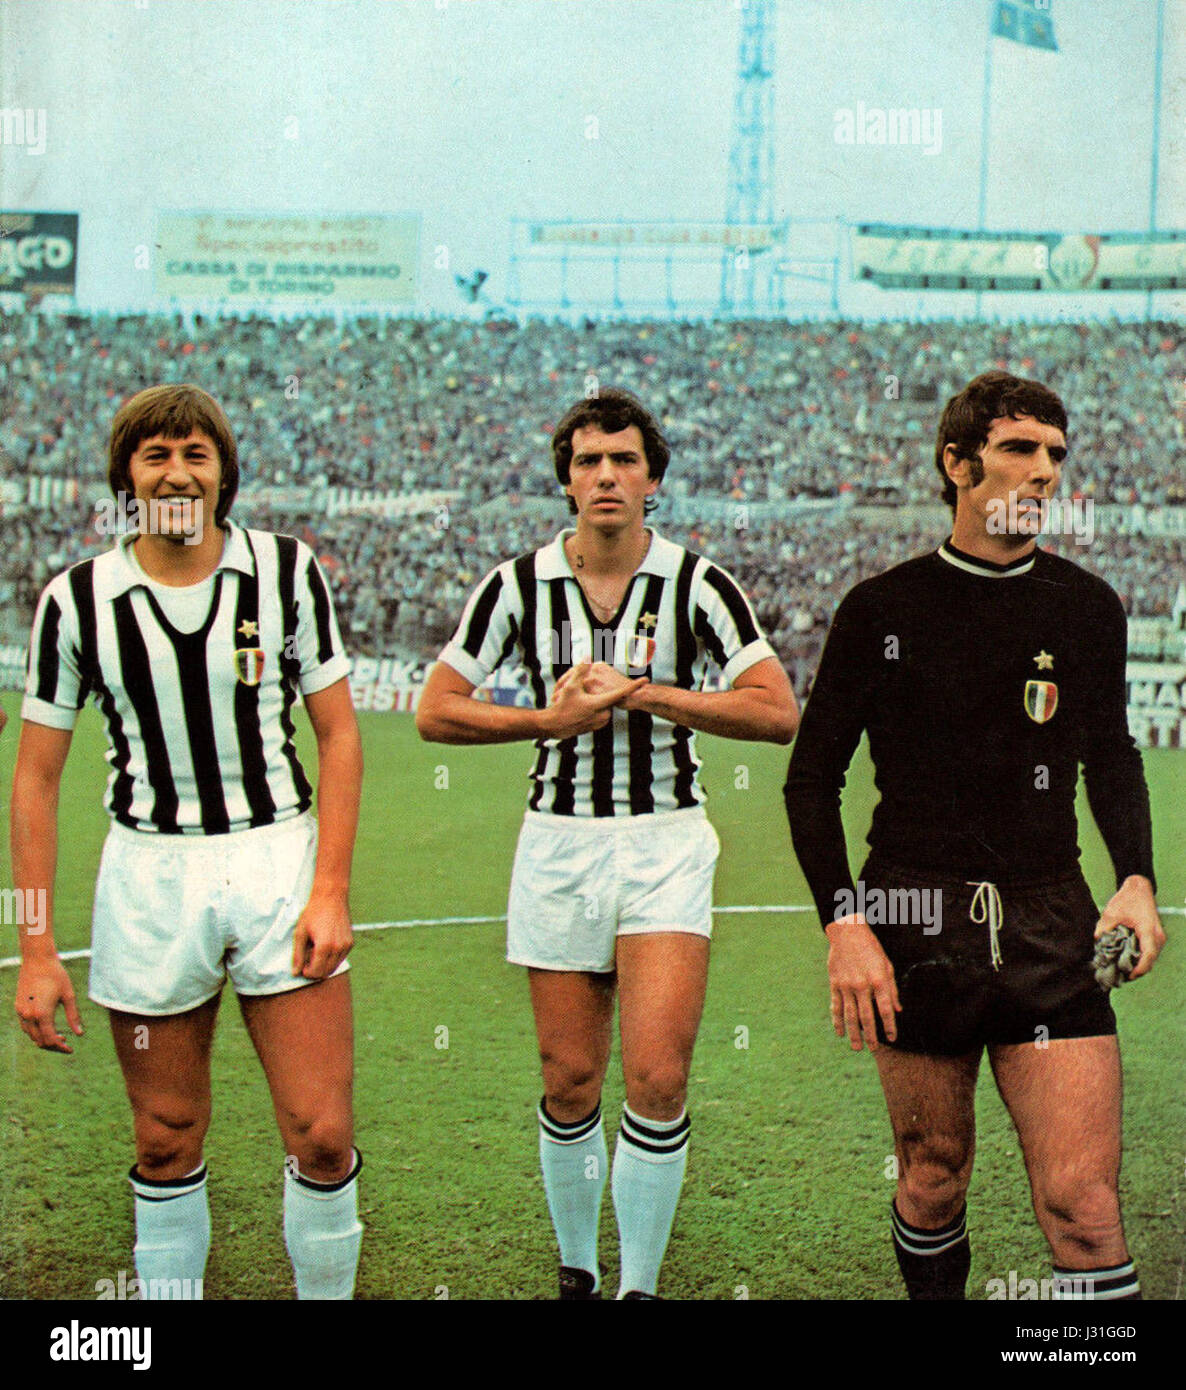 Juventus FC - 1973 - G. Marchetti, R. Bettega, D. Zoff Foto de stock